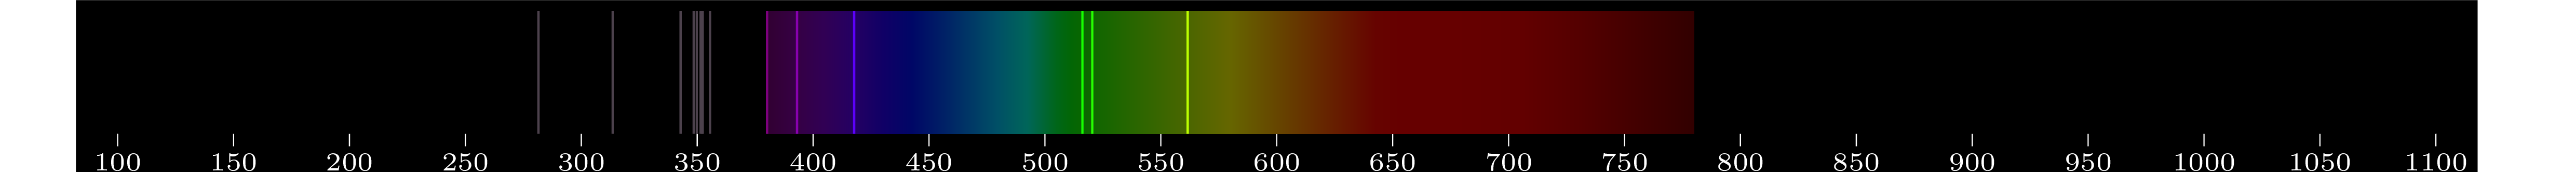 emmision spectra of element Es